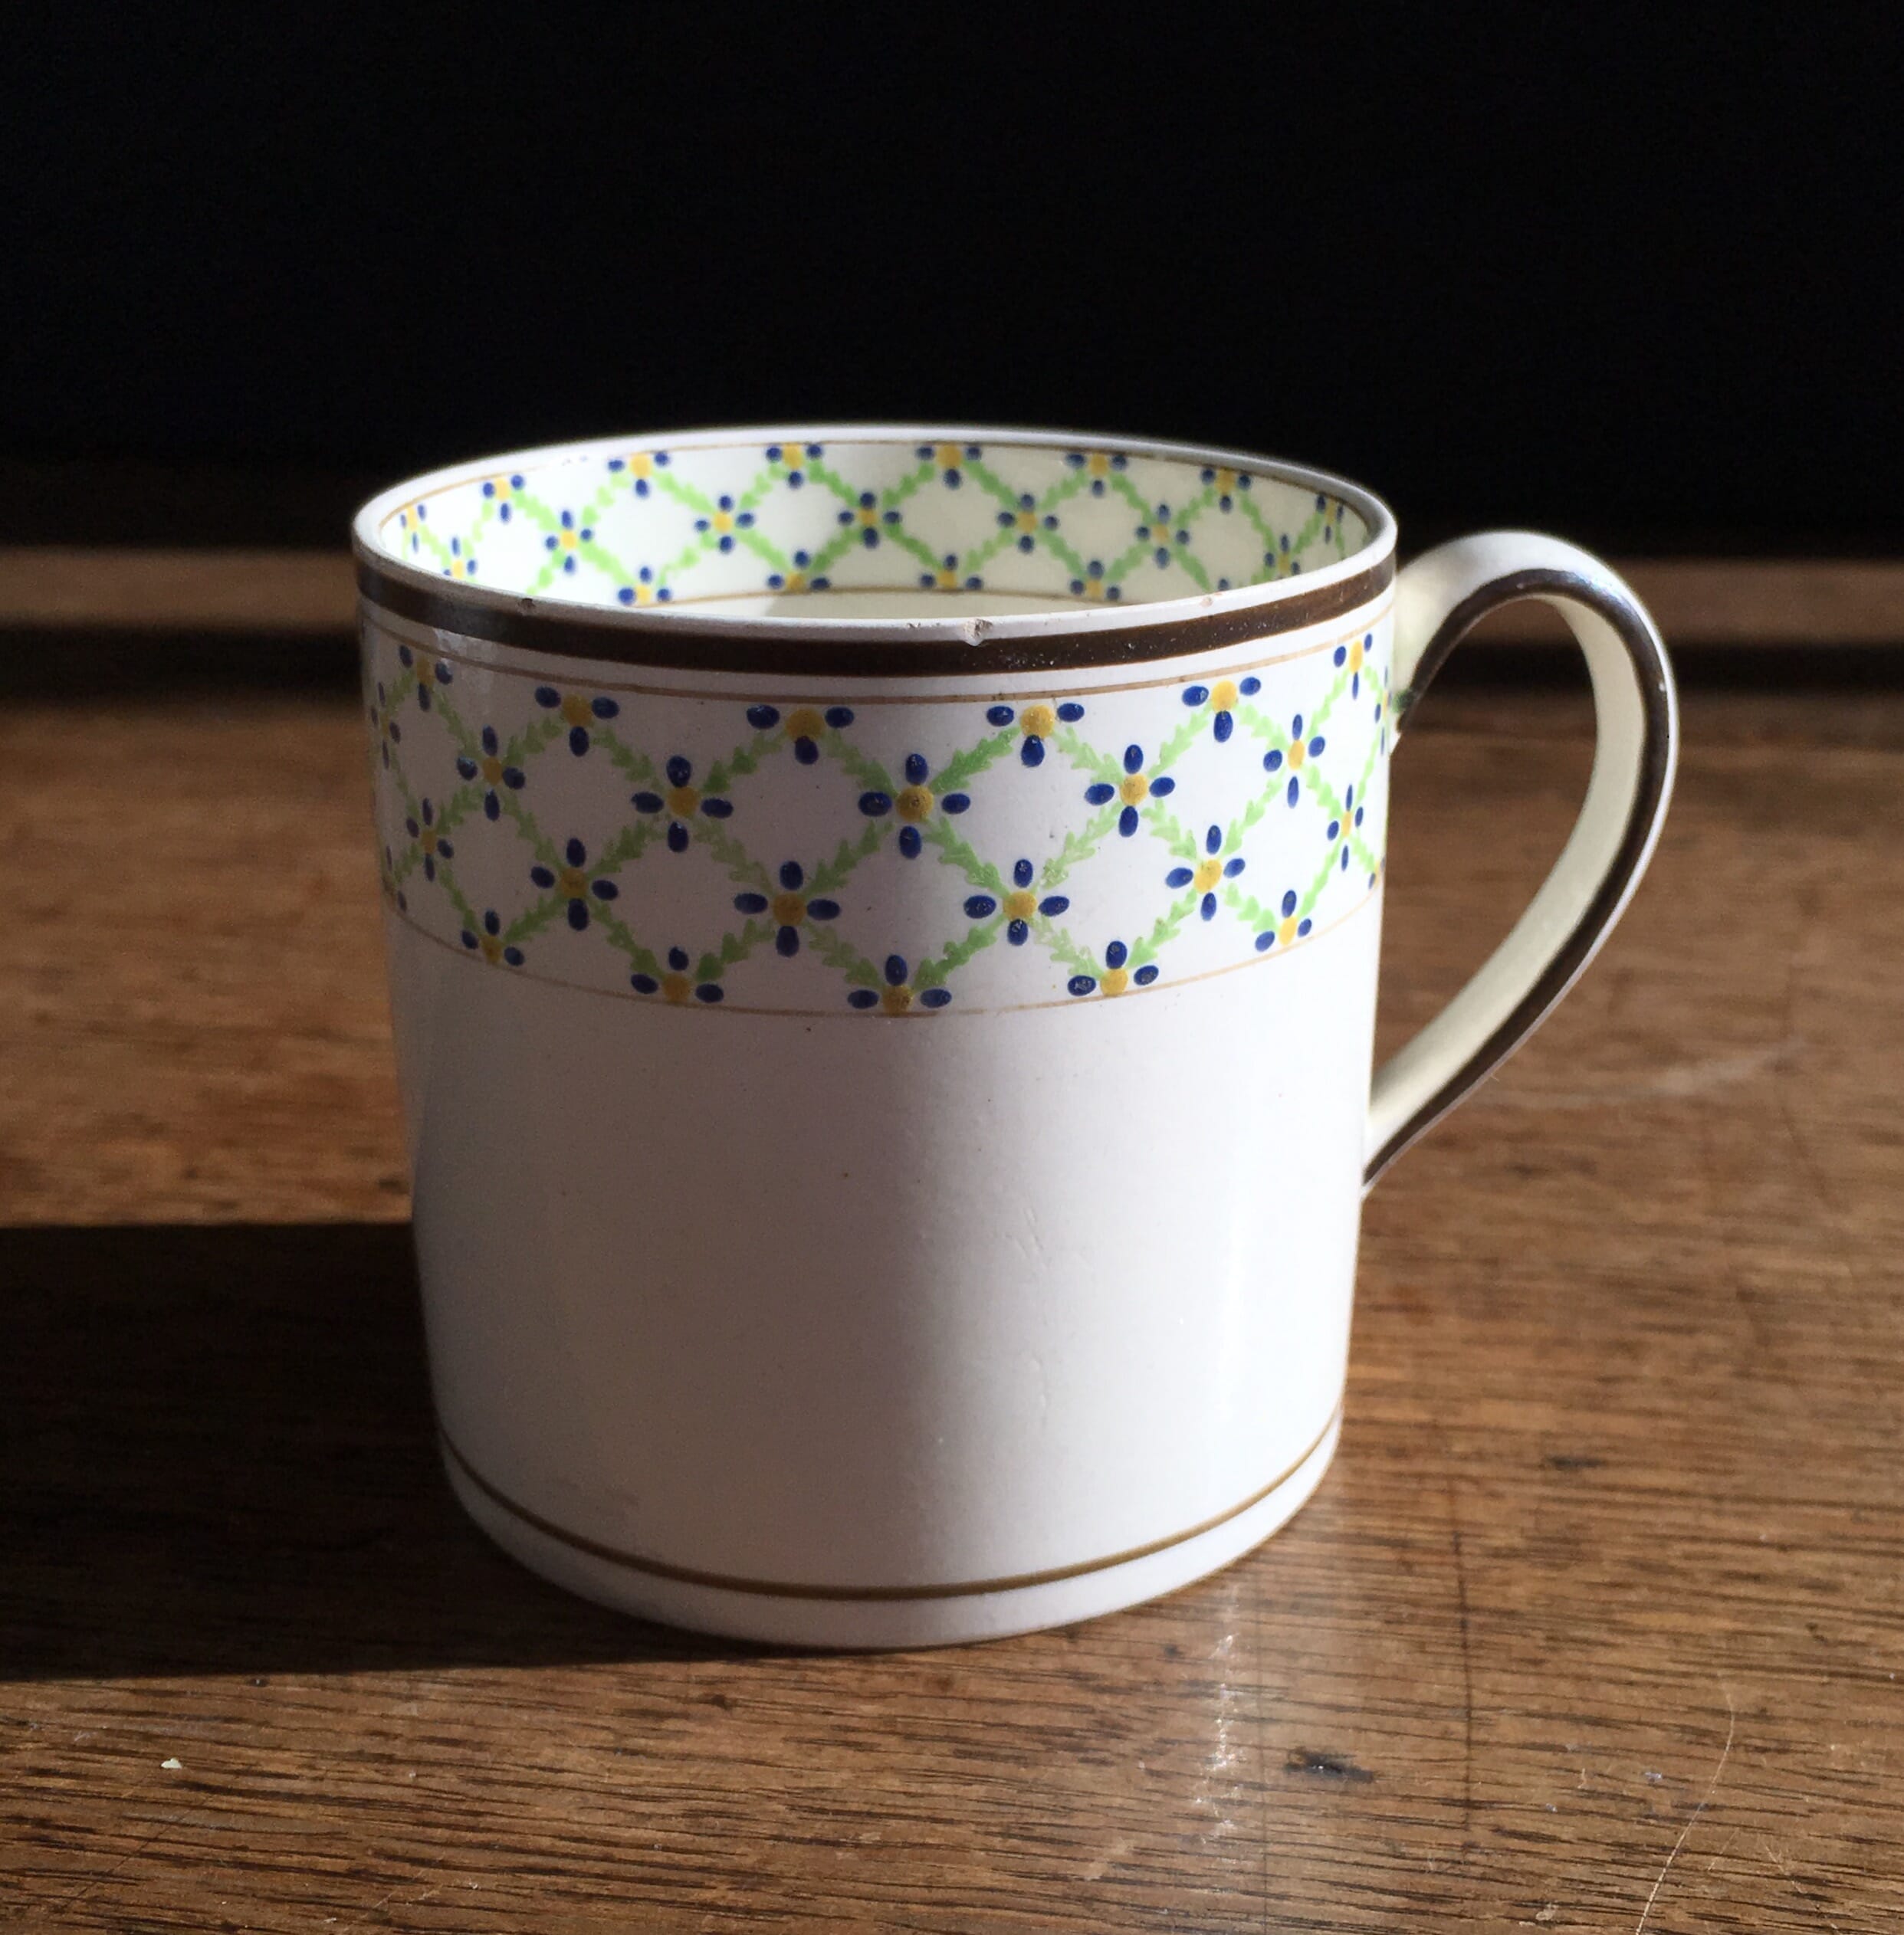 Wedgwood Creamware coffee can with daisy head borders, c. 1800-0